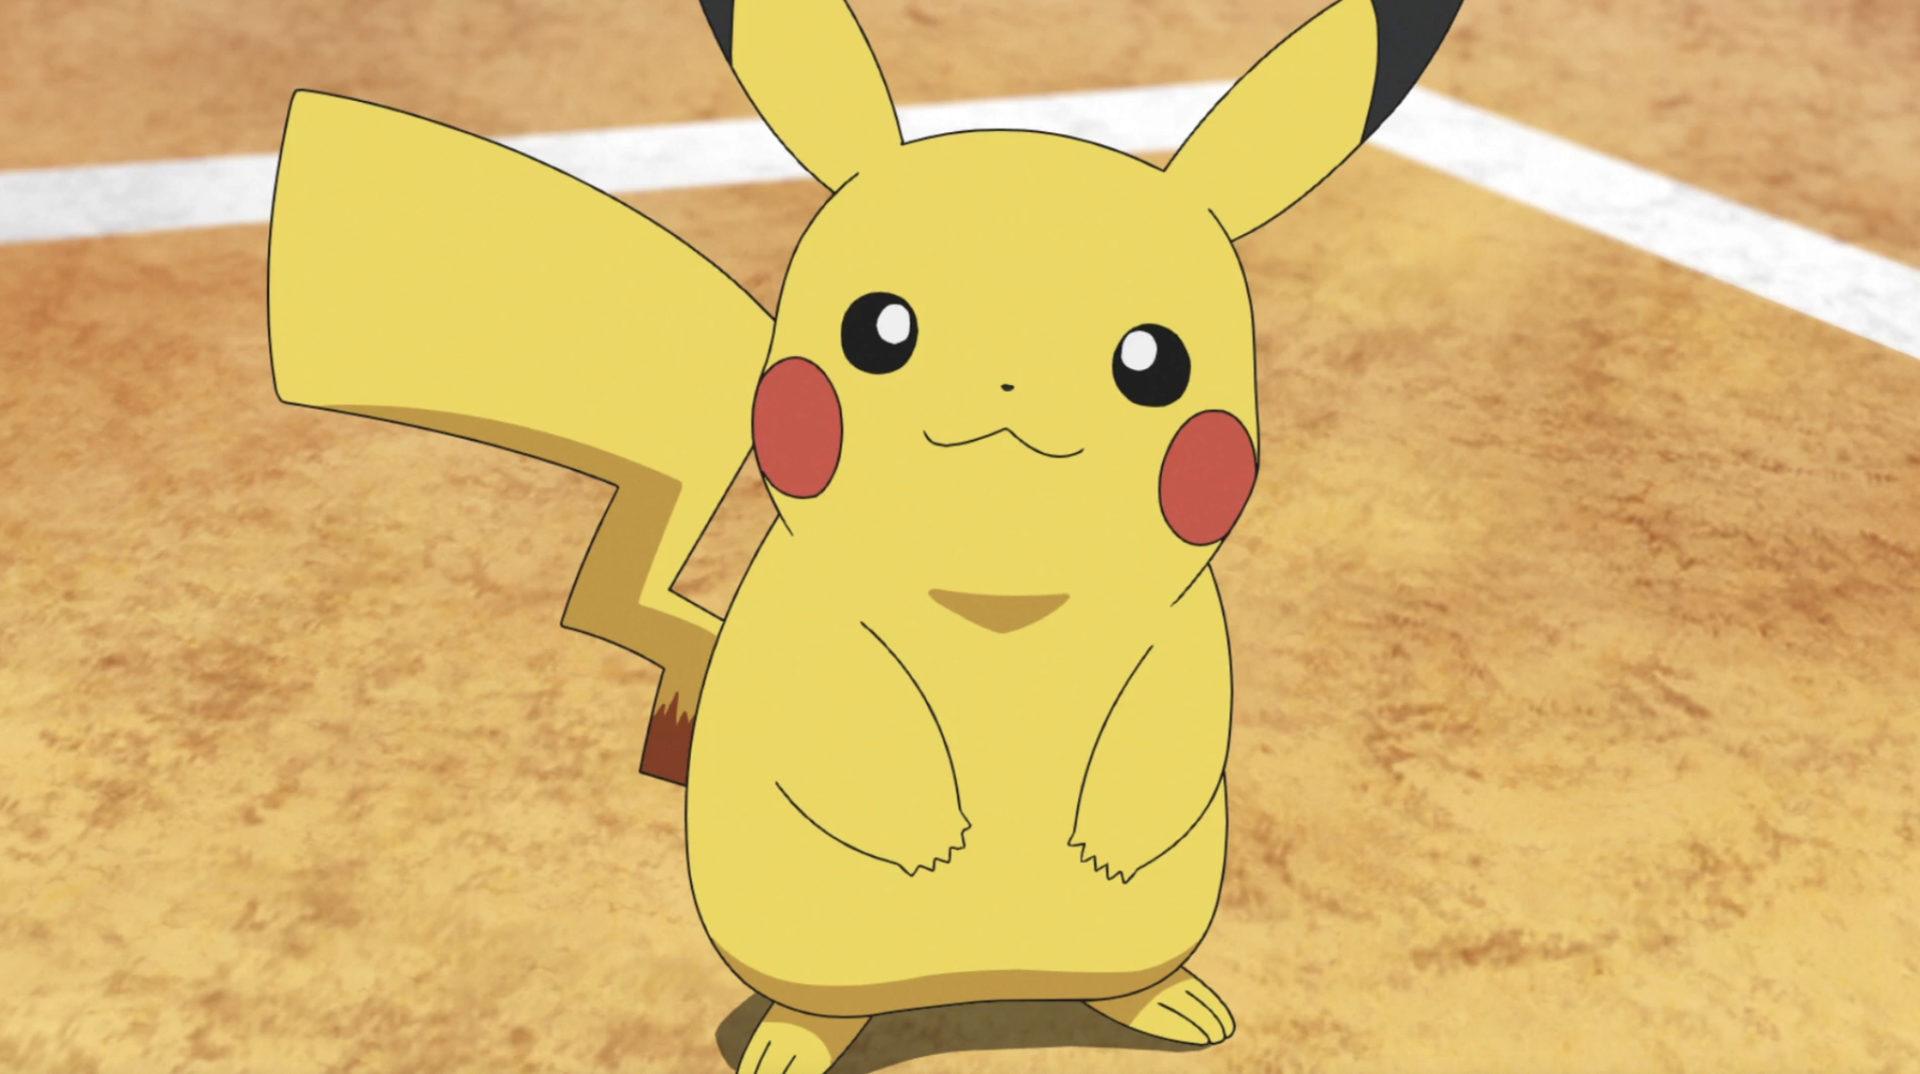 Screenshot of Pikachu from the Pokemon anime.